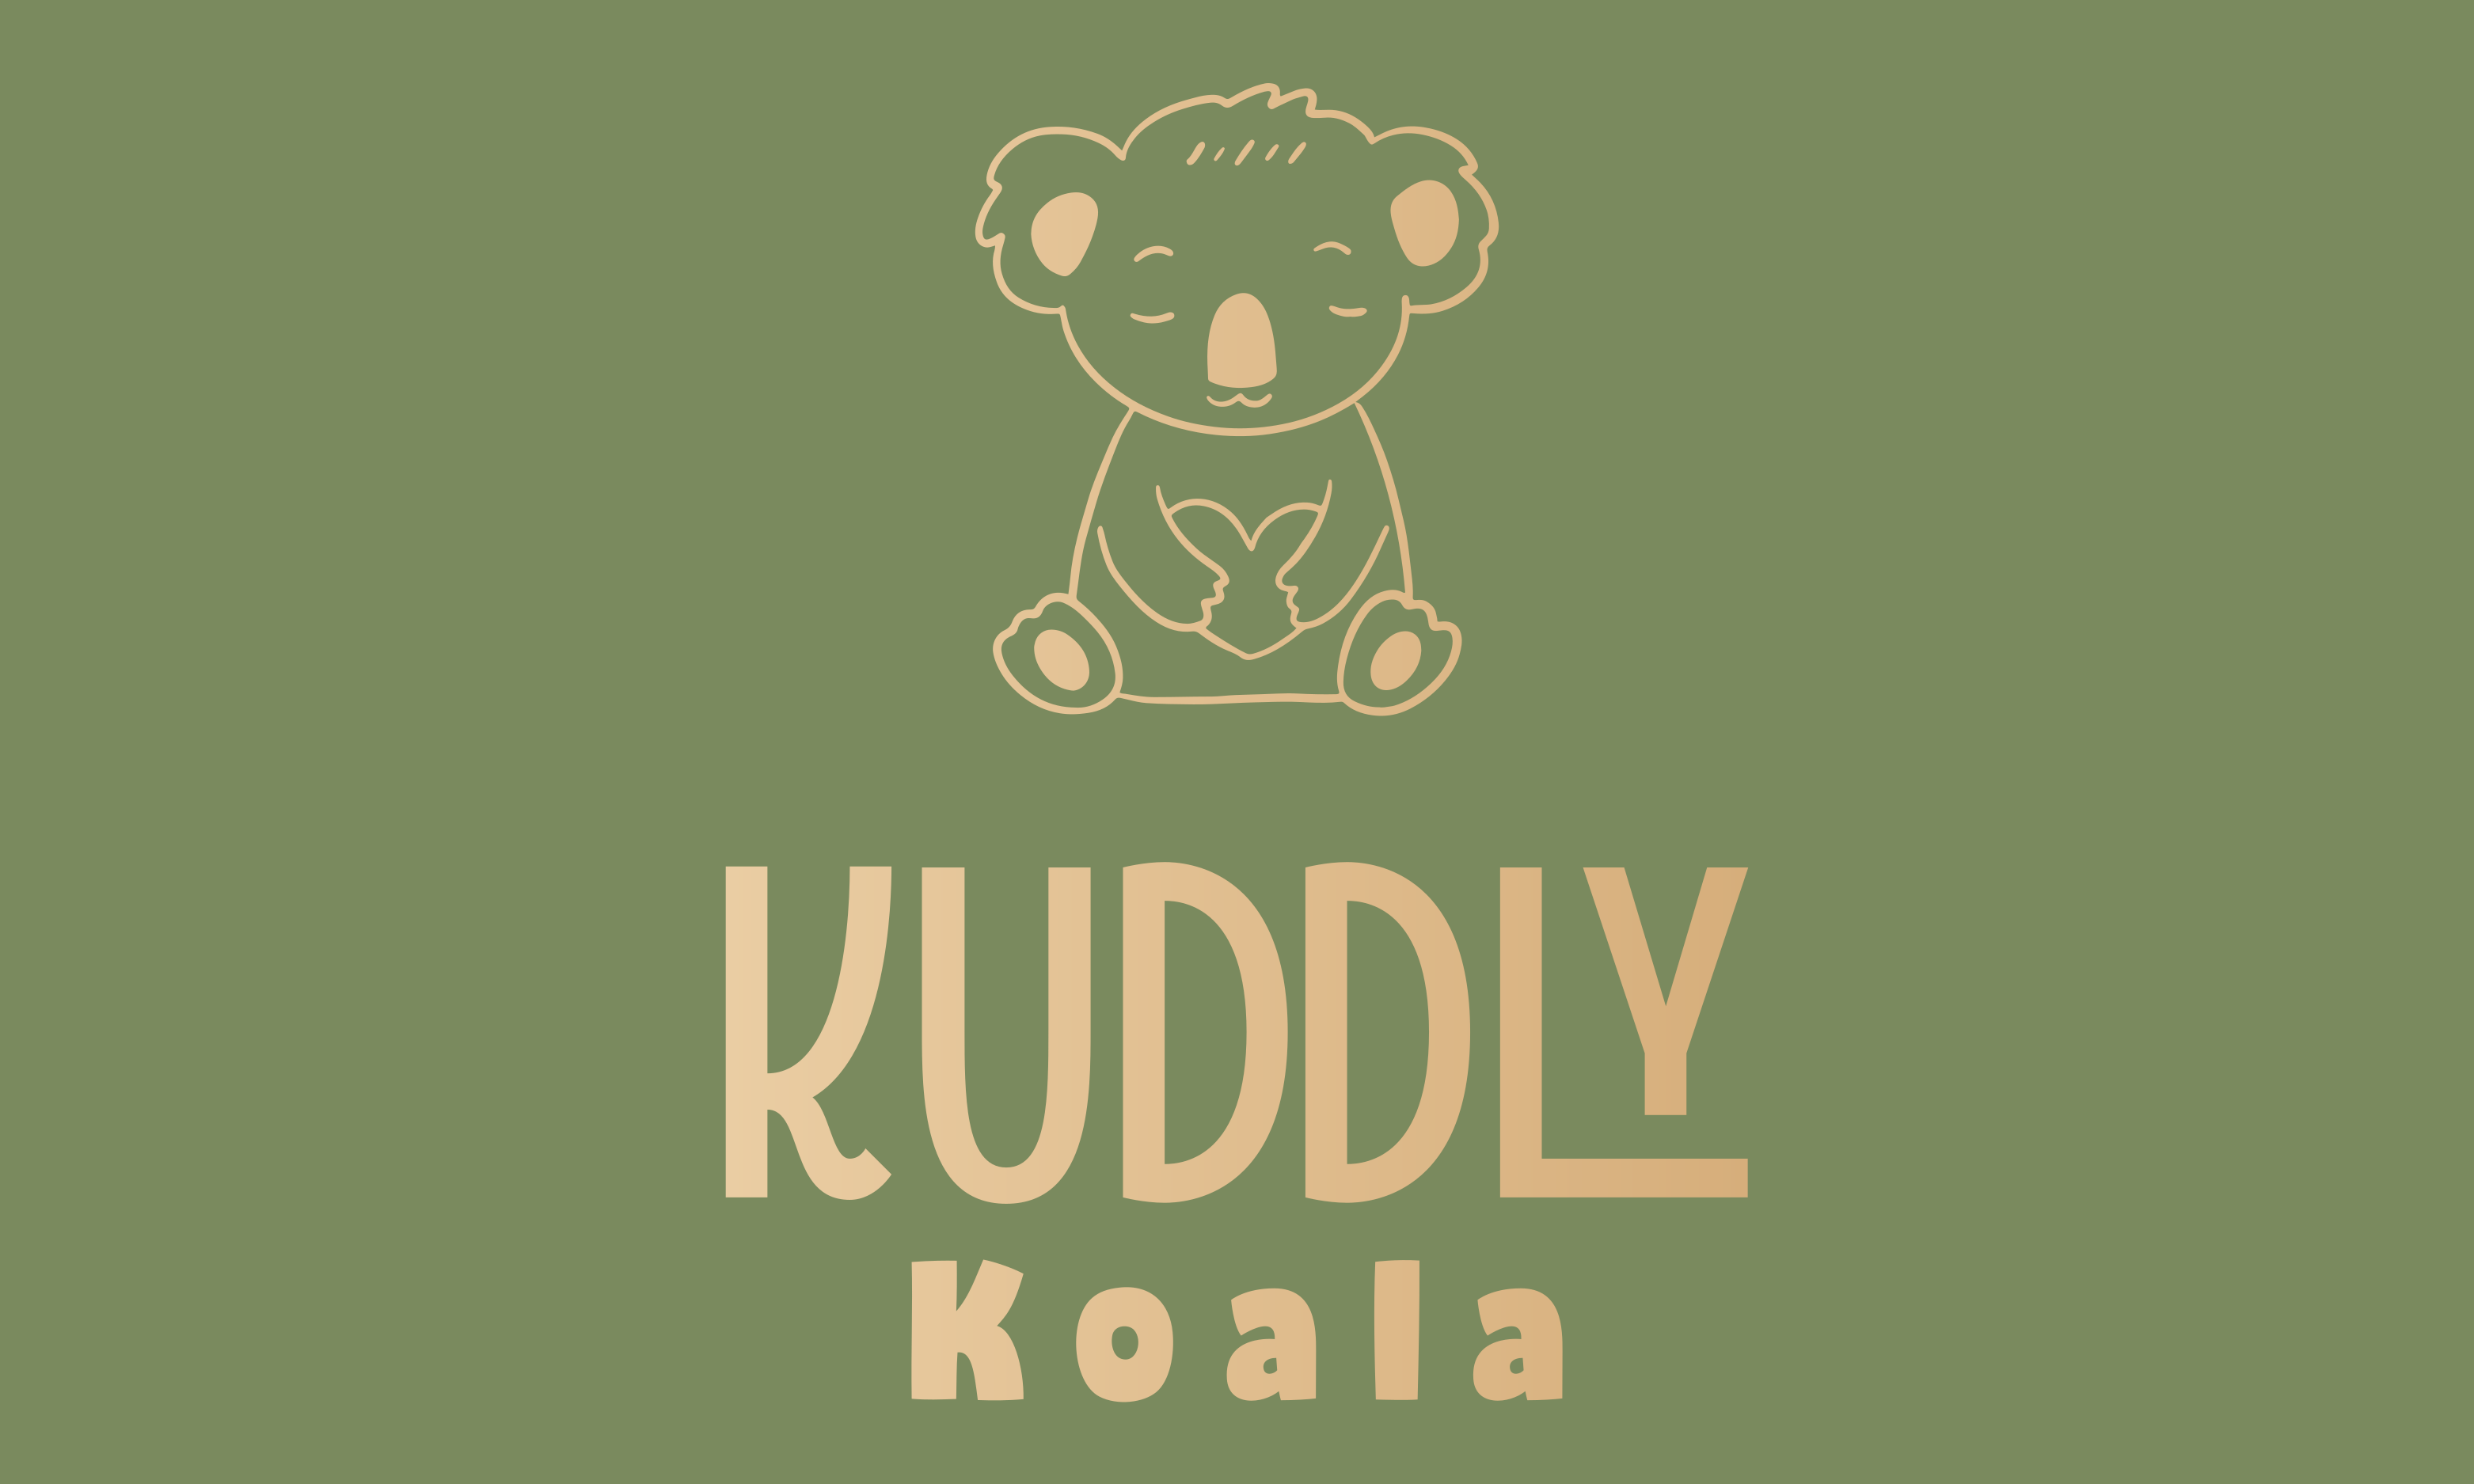 (c) Kuddlykoala.com